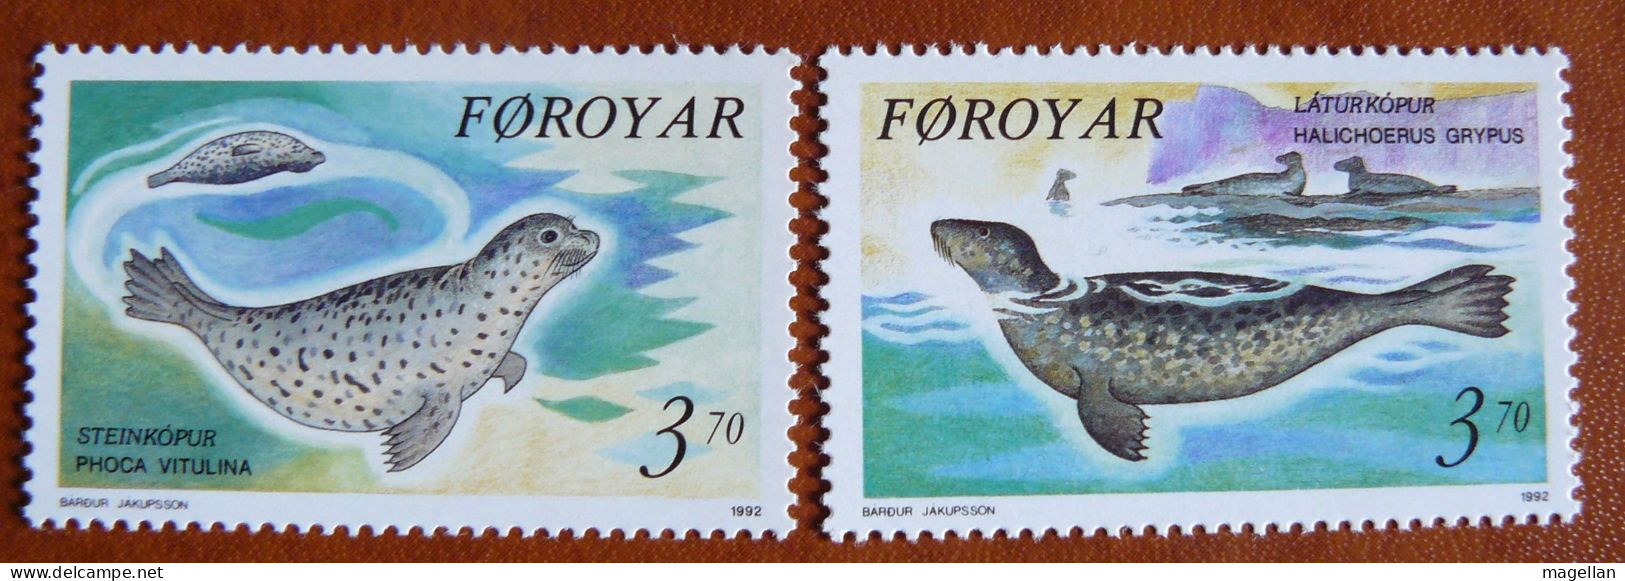 Iles Féroé - Faroe Islands - Färöer Inseln - Yvert N° 231/232 Neufs ** (MNH) - Mammifères Marins - Faroe Islands